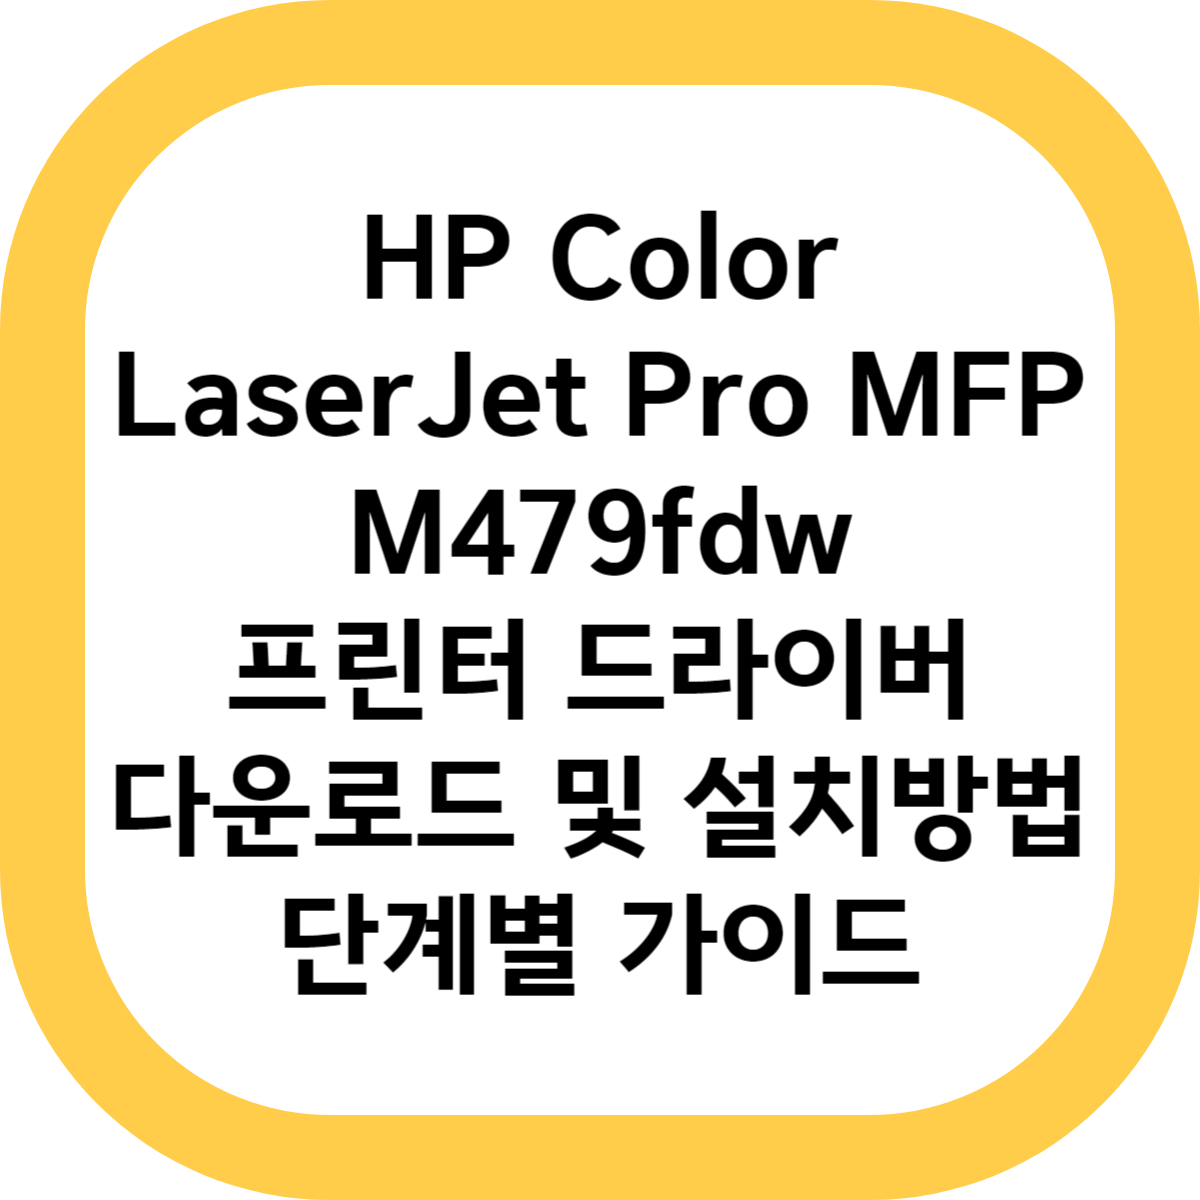 HP Color LaserJet Pro MFP M479fdw 프린터 드라이버 다운로드 및 설치방법 단계별 가이드